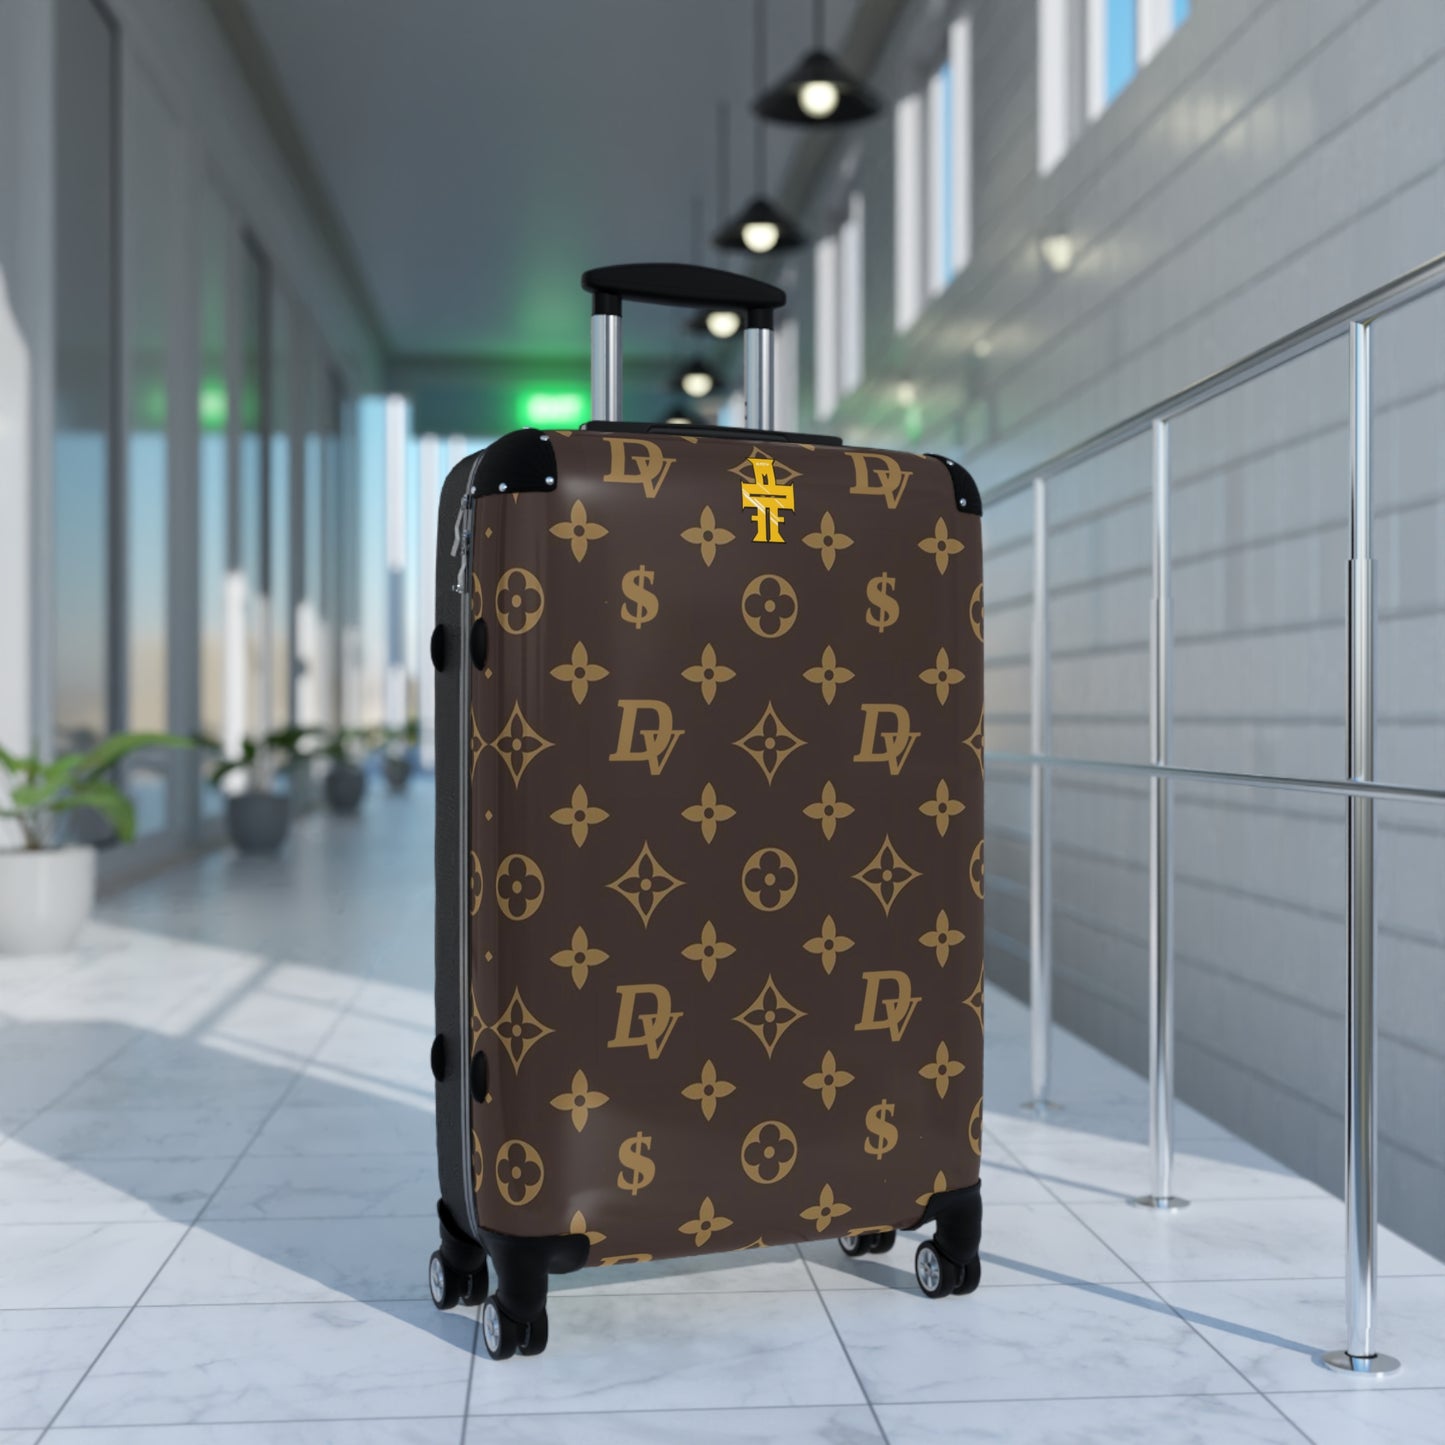 DuckettVuitton Brünette Suitcase